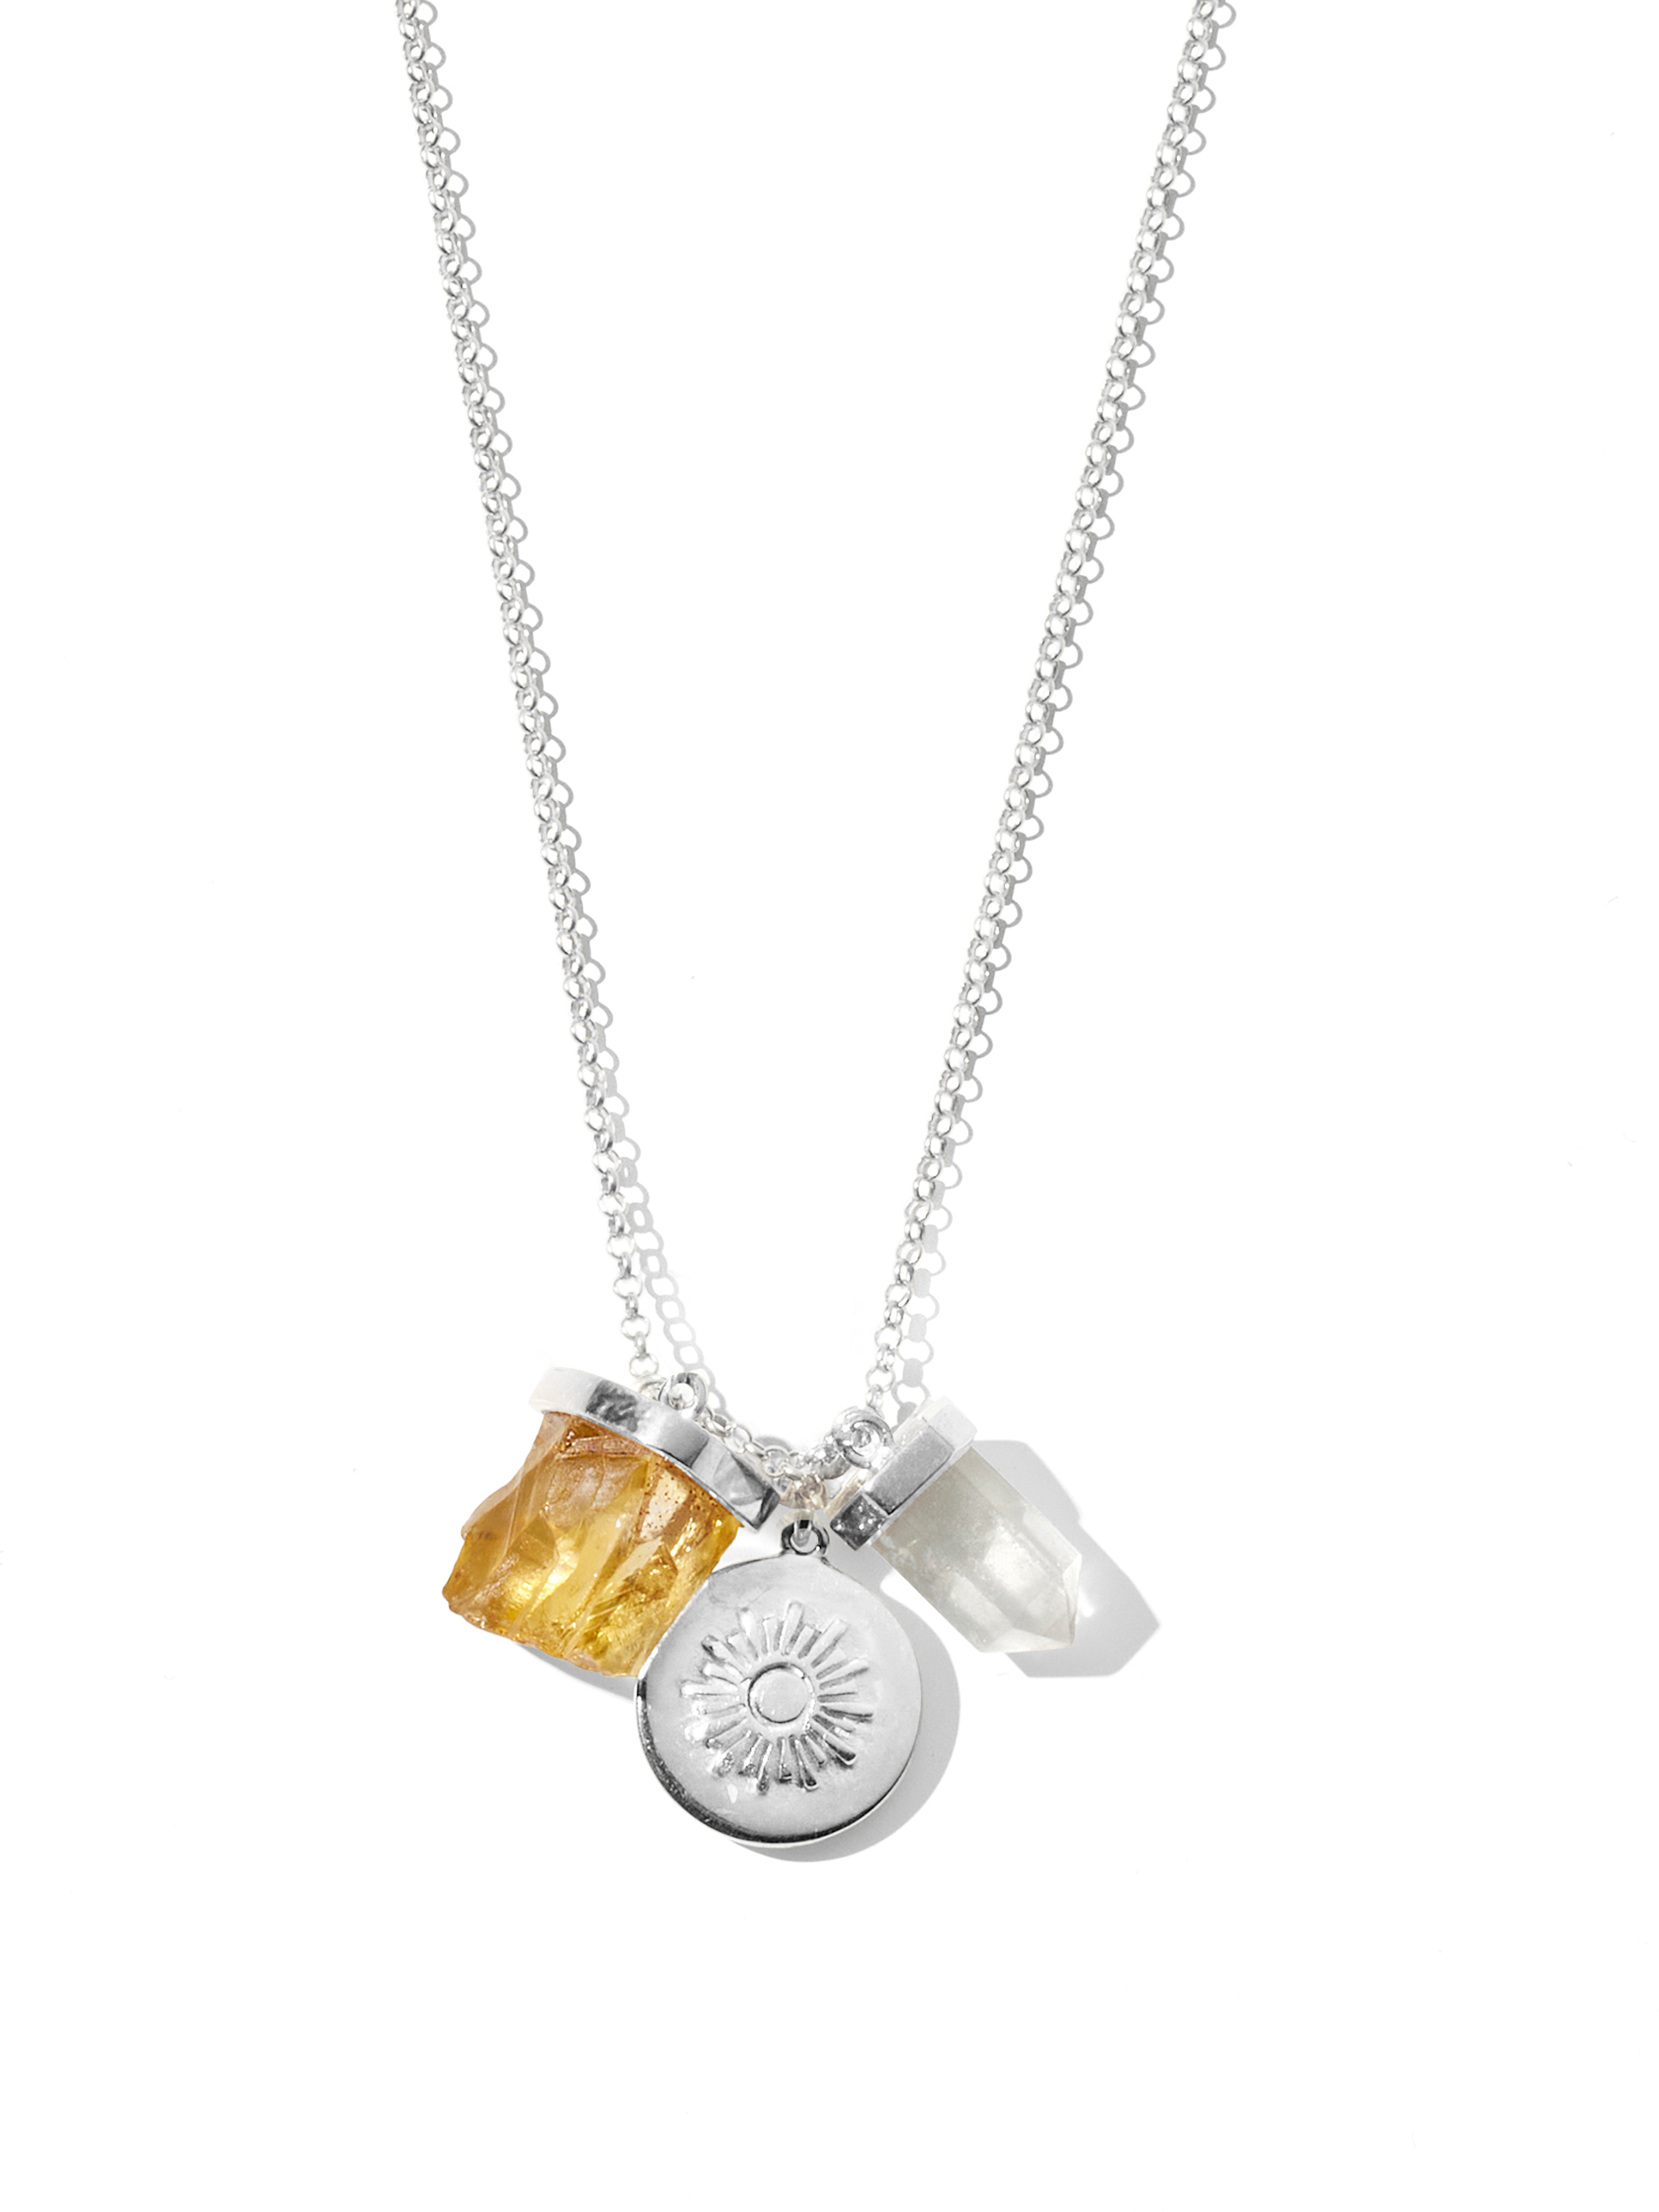 prosperity necklace | citrine, clear quartz + sun